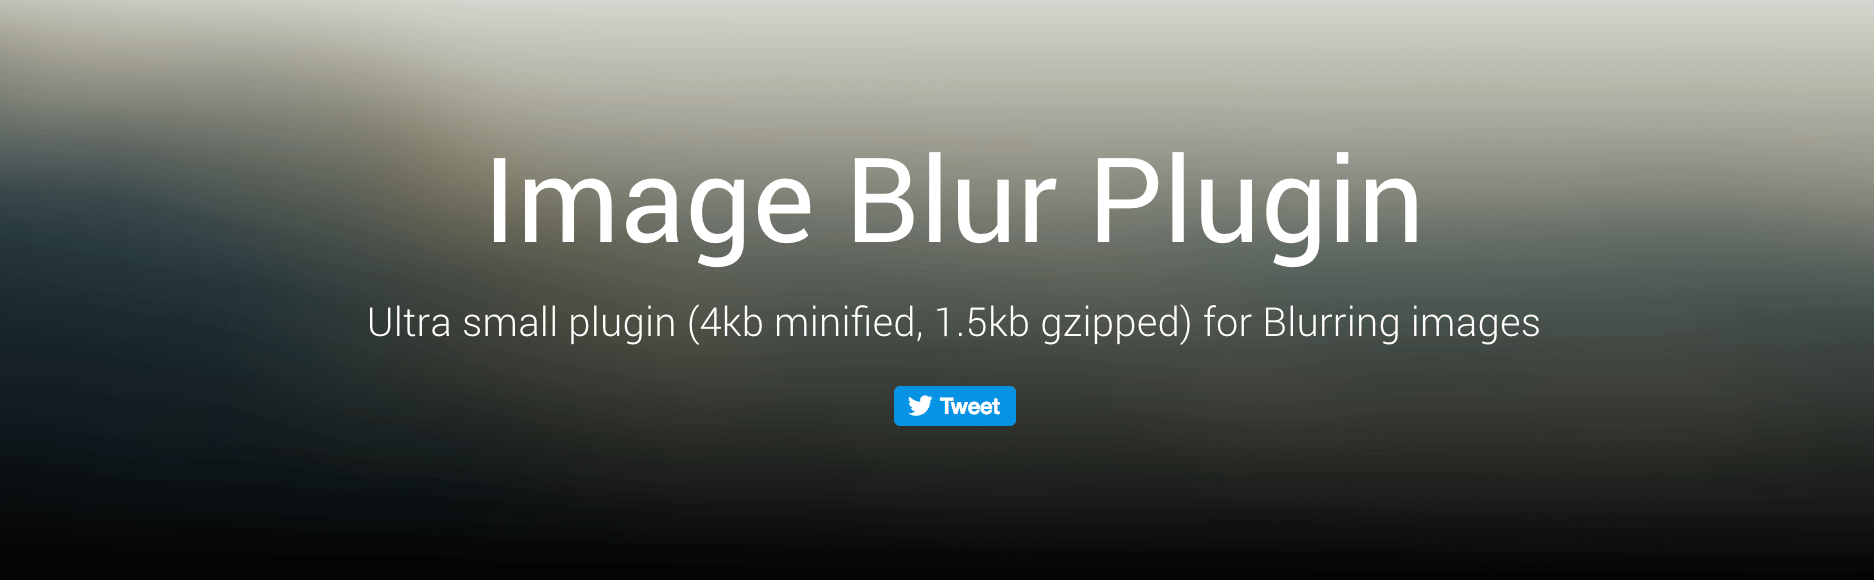 image-blur-plugin